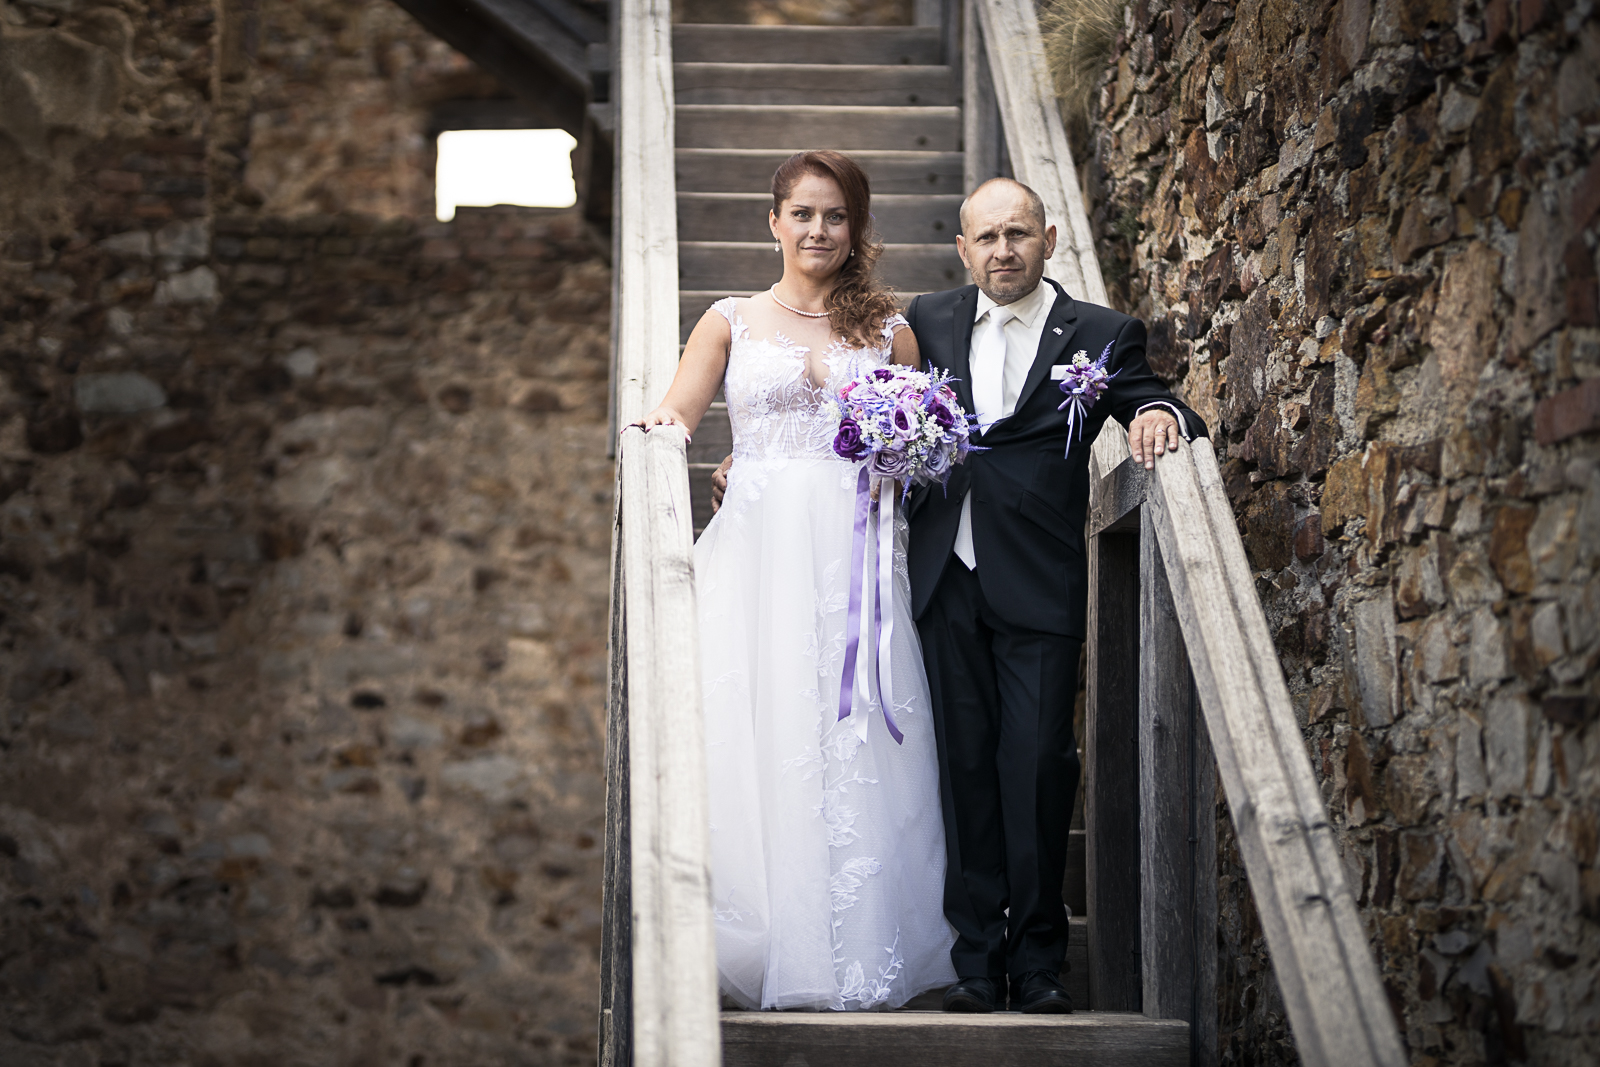 Svatba ženich a nevěsta na schodech